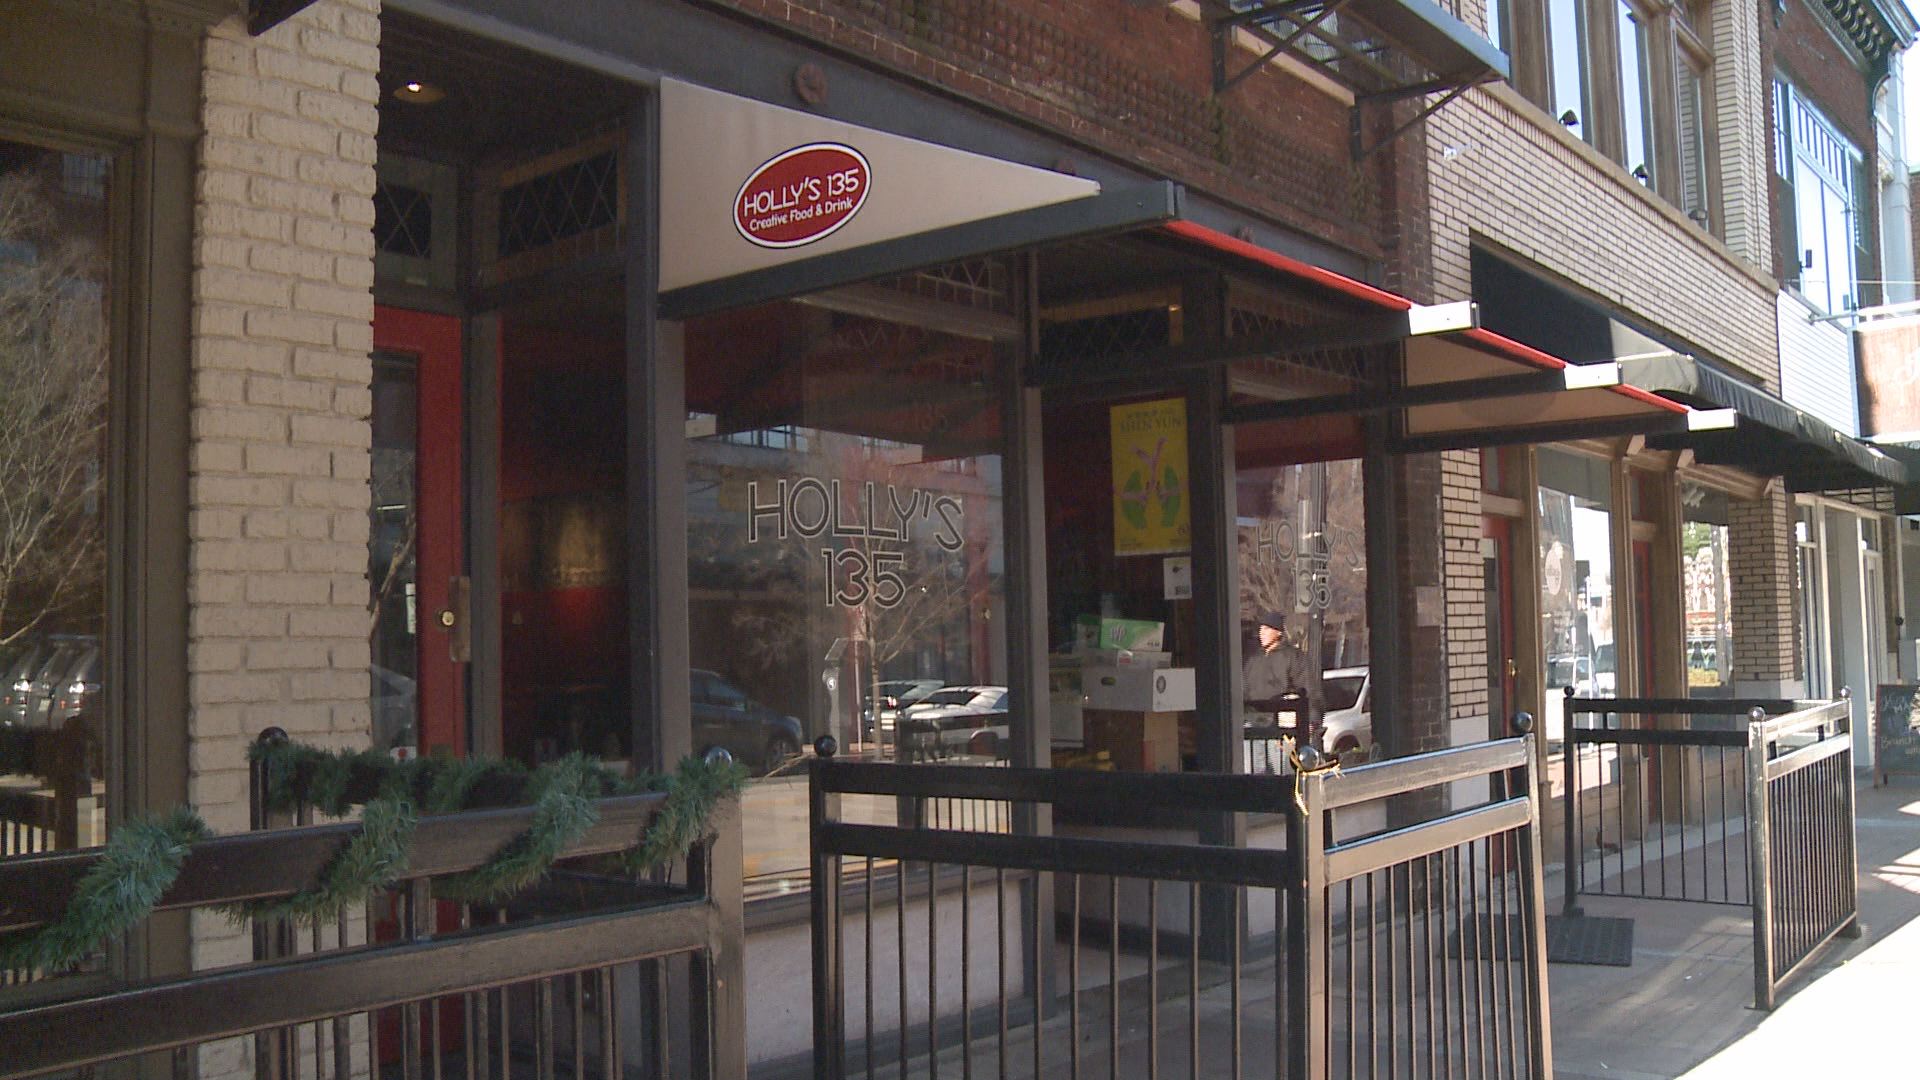 wbir.com | Downtown Knoxville restaurant closes